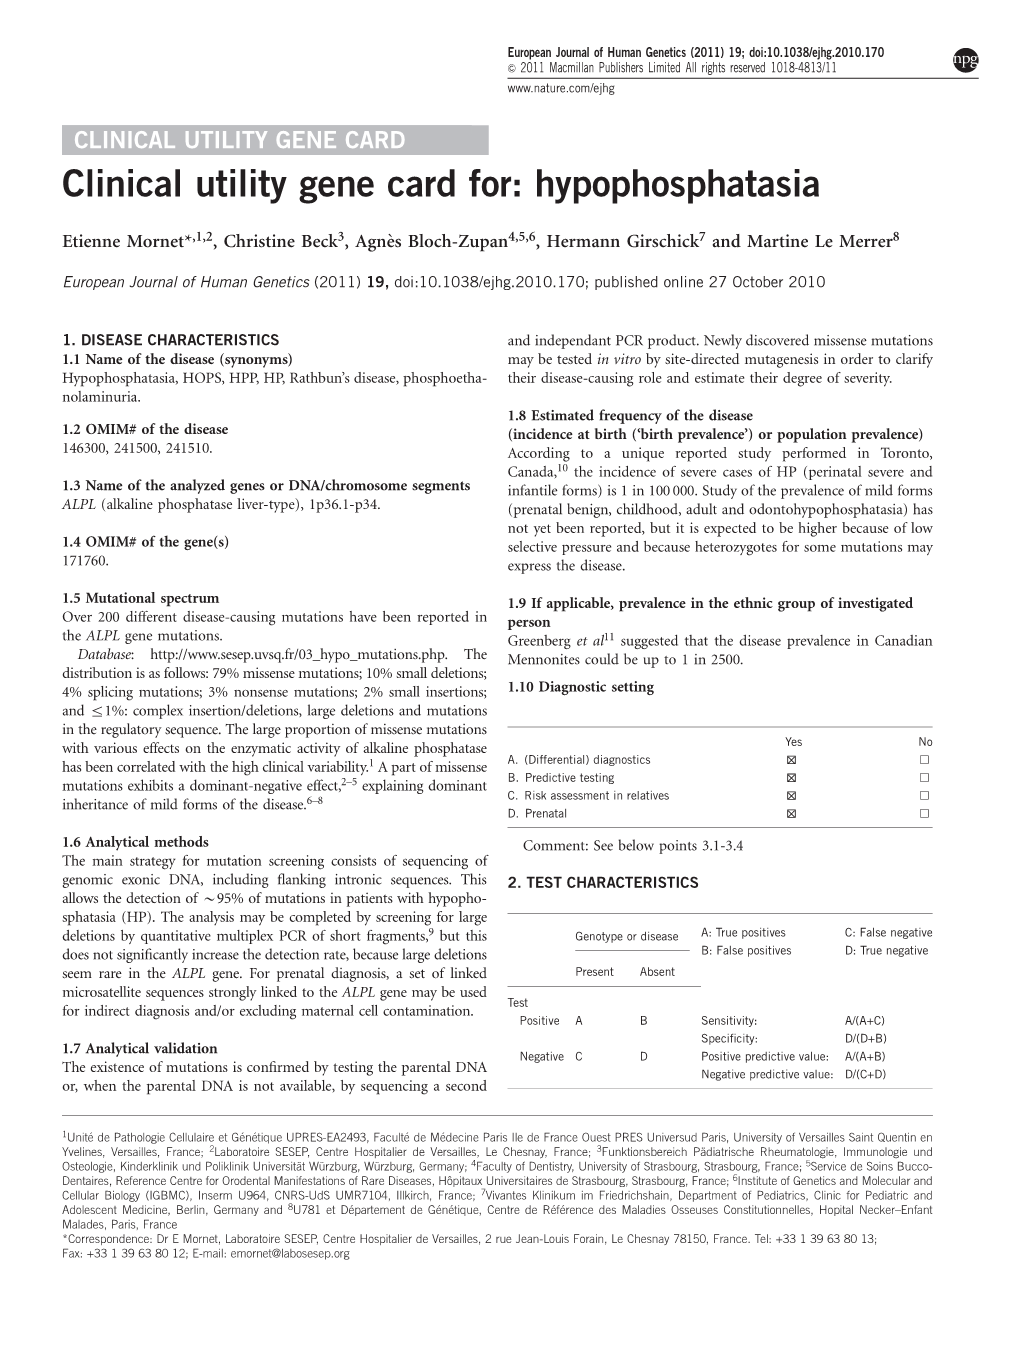 Clinical Utility Gene Card For: Hypophosphatasia